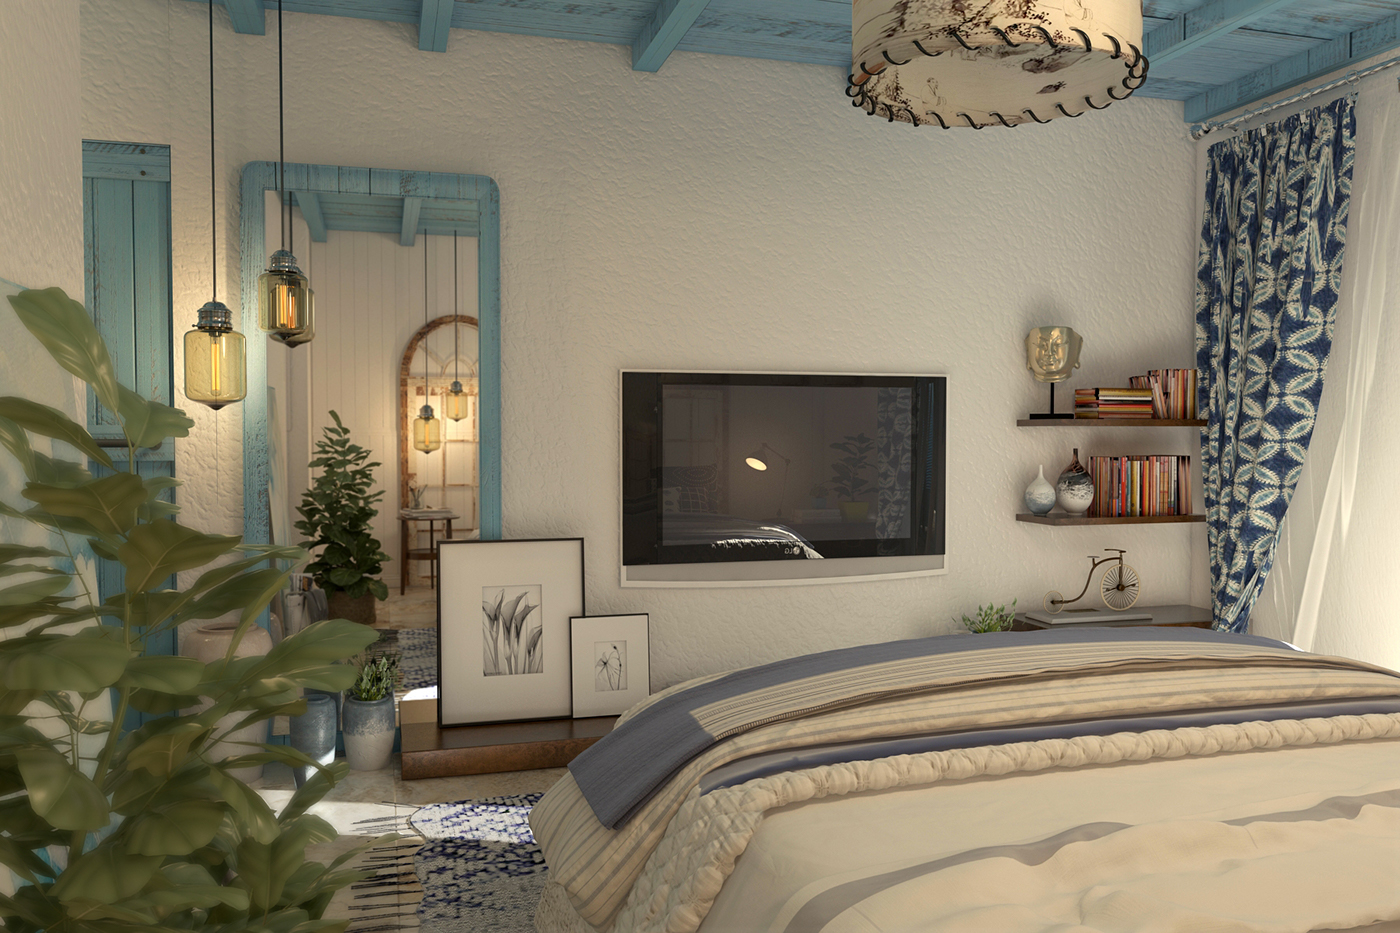 santorini modern bedroom decor interior design furniture decoration